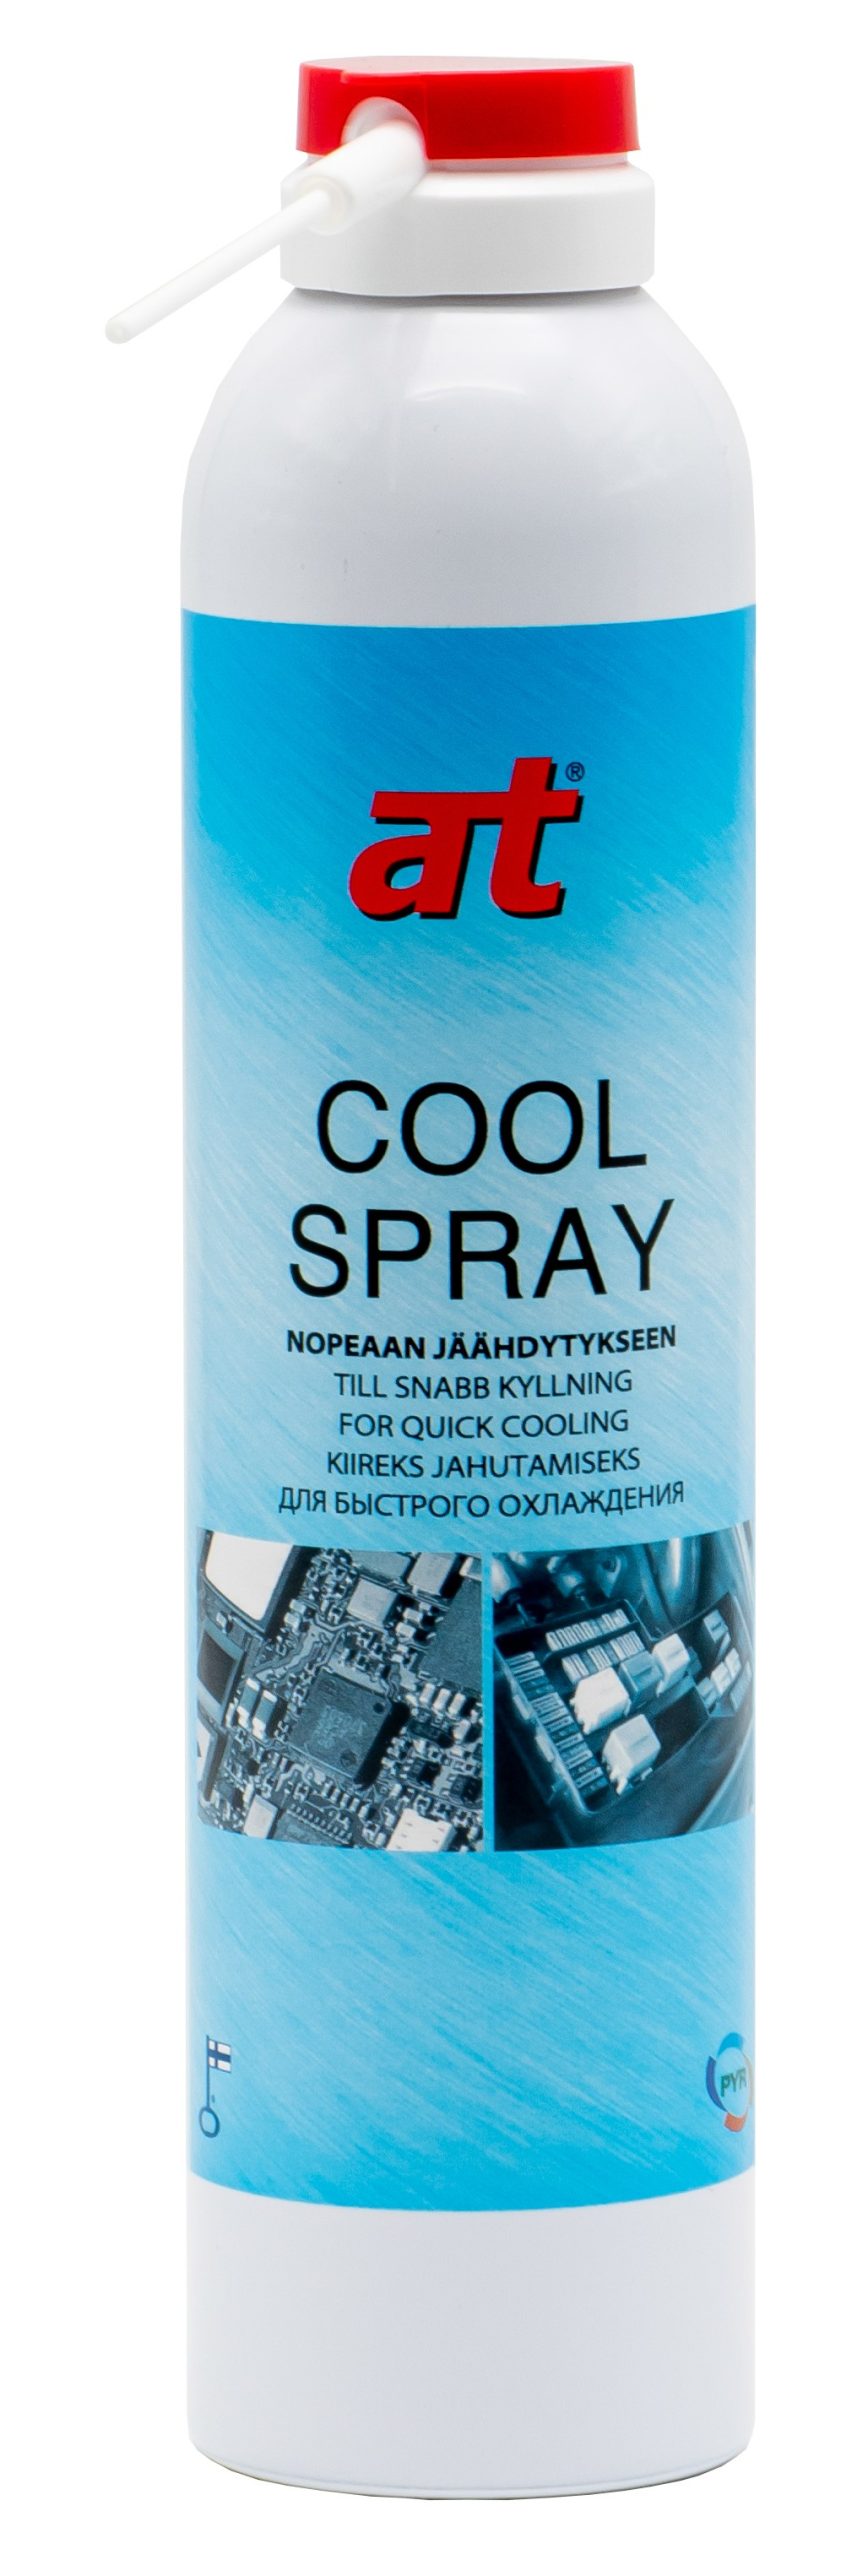 Cool spray, 2700